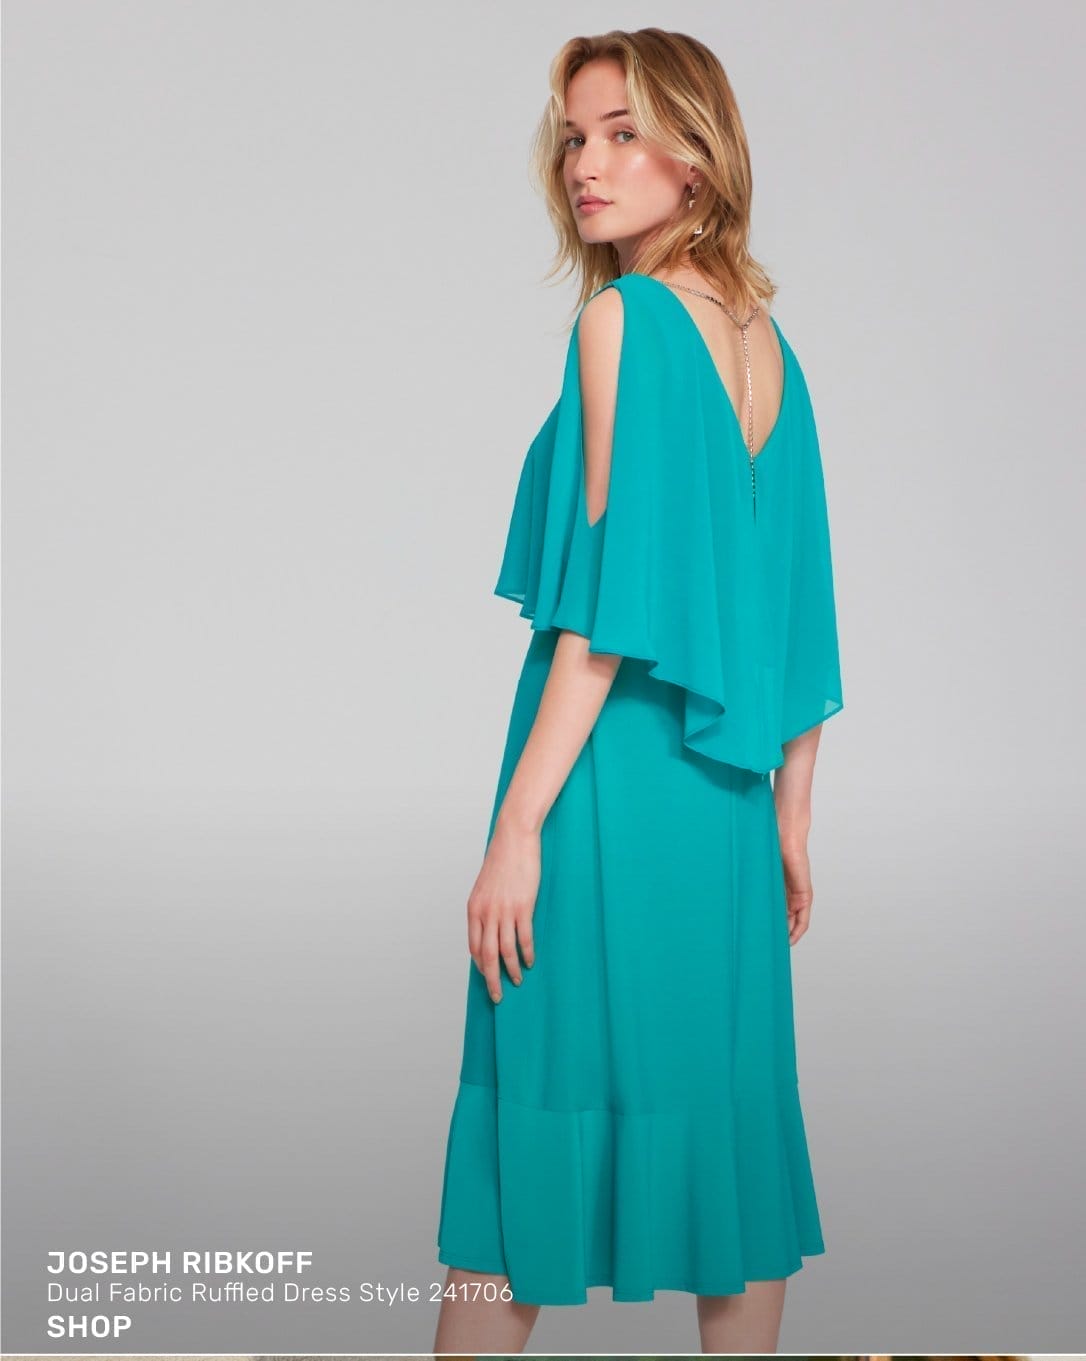 Dual Fabric Ruffled Dress Style 241706